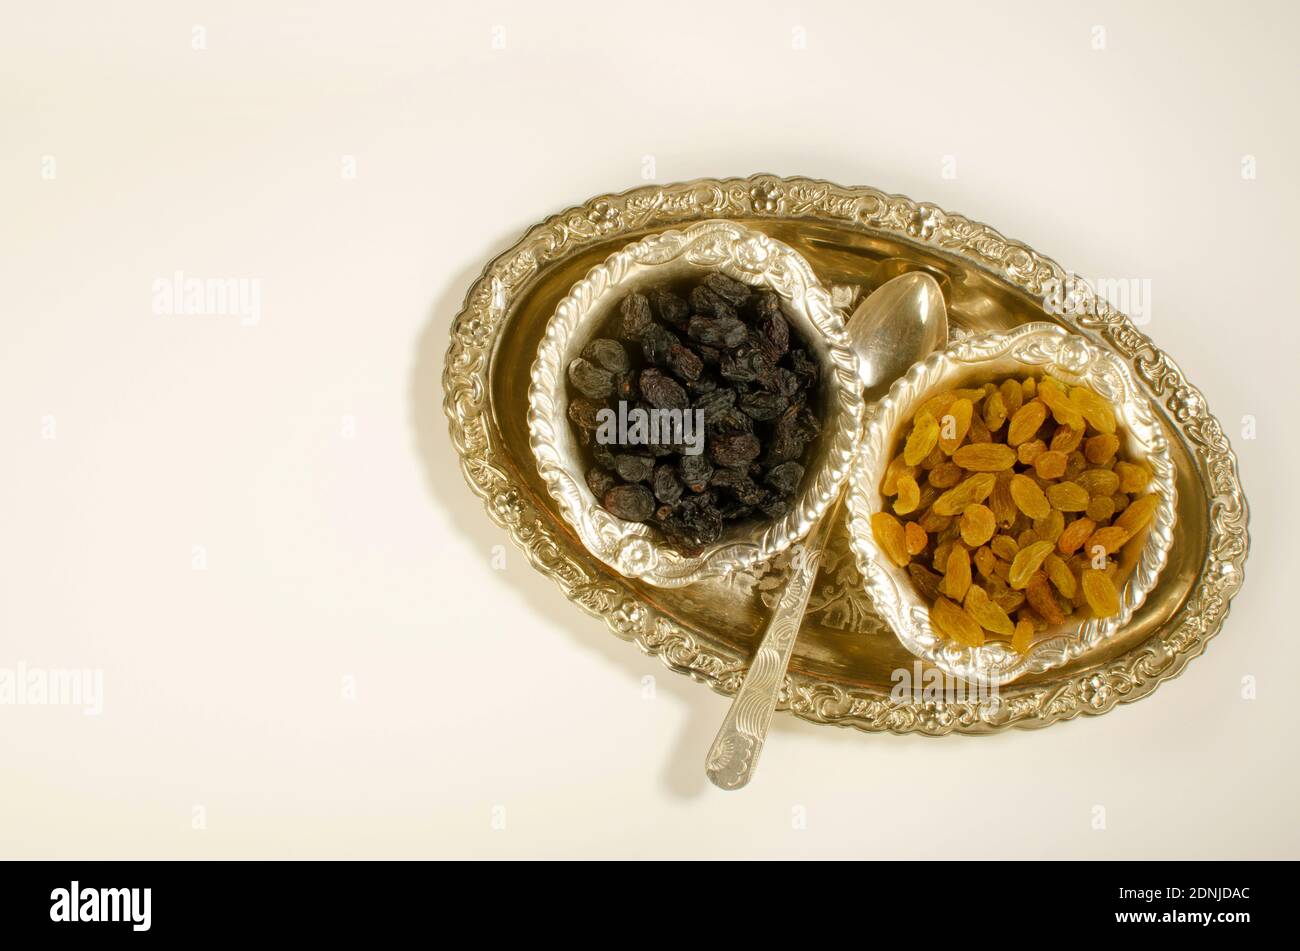 Dried Fruit Kismis or raisins presented in silver bowls. Top angle. Studio Shot Stock Photo